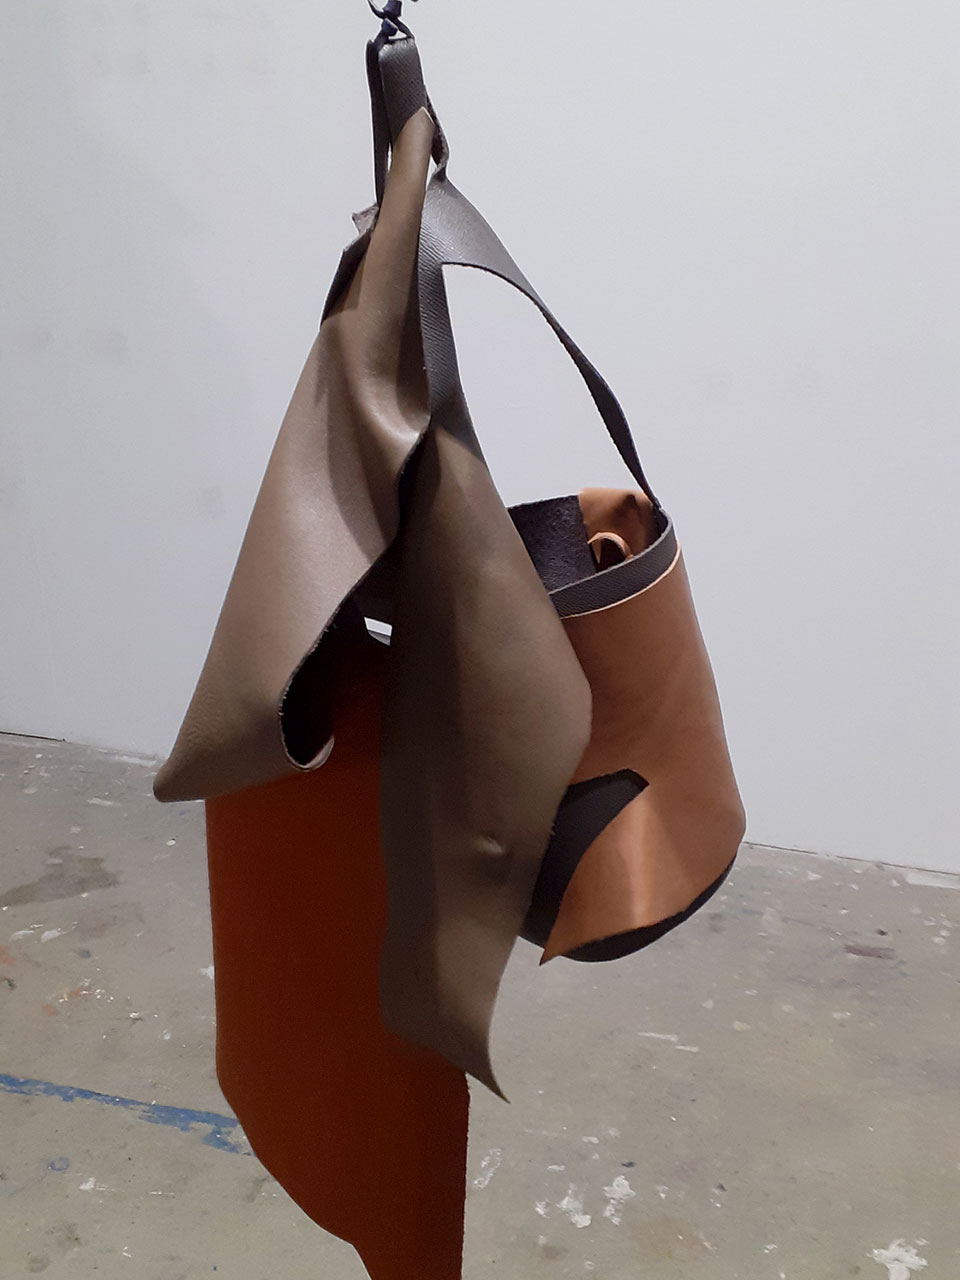 Nathalie Fougeras installation sculpture cuir A